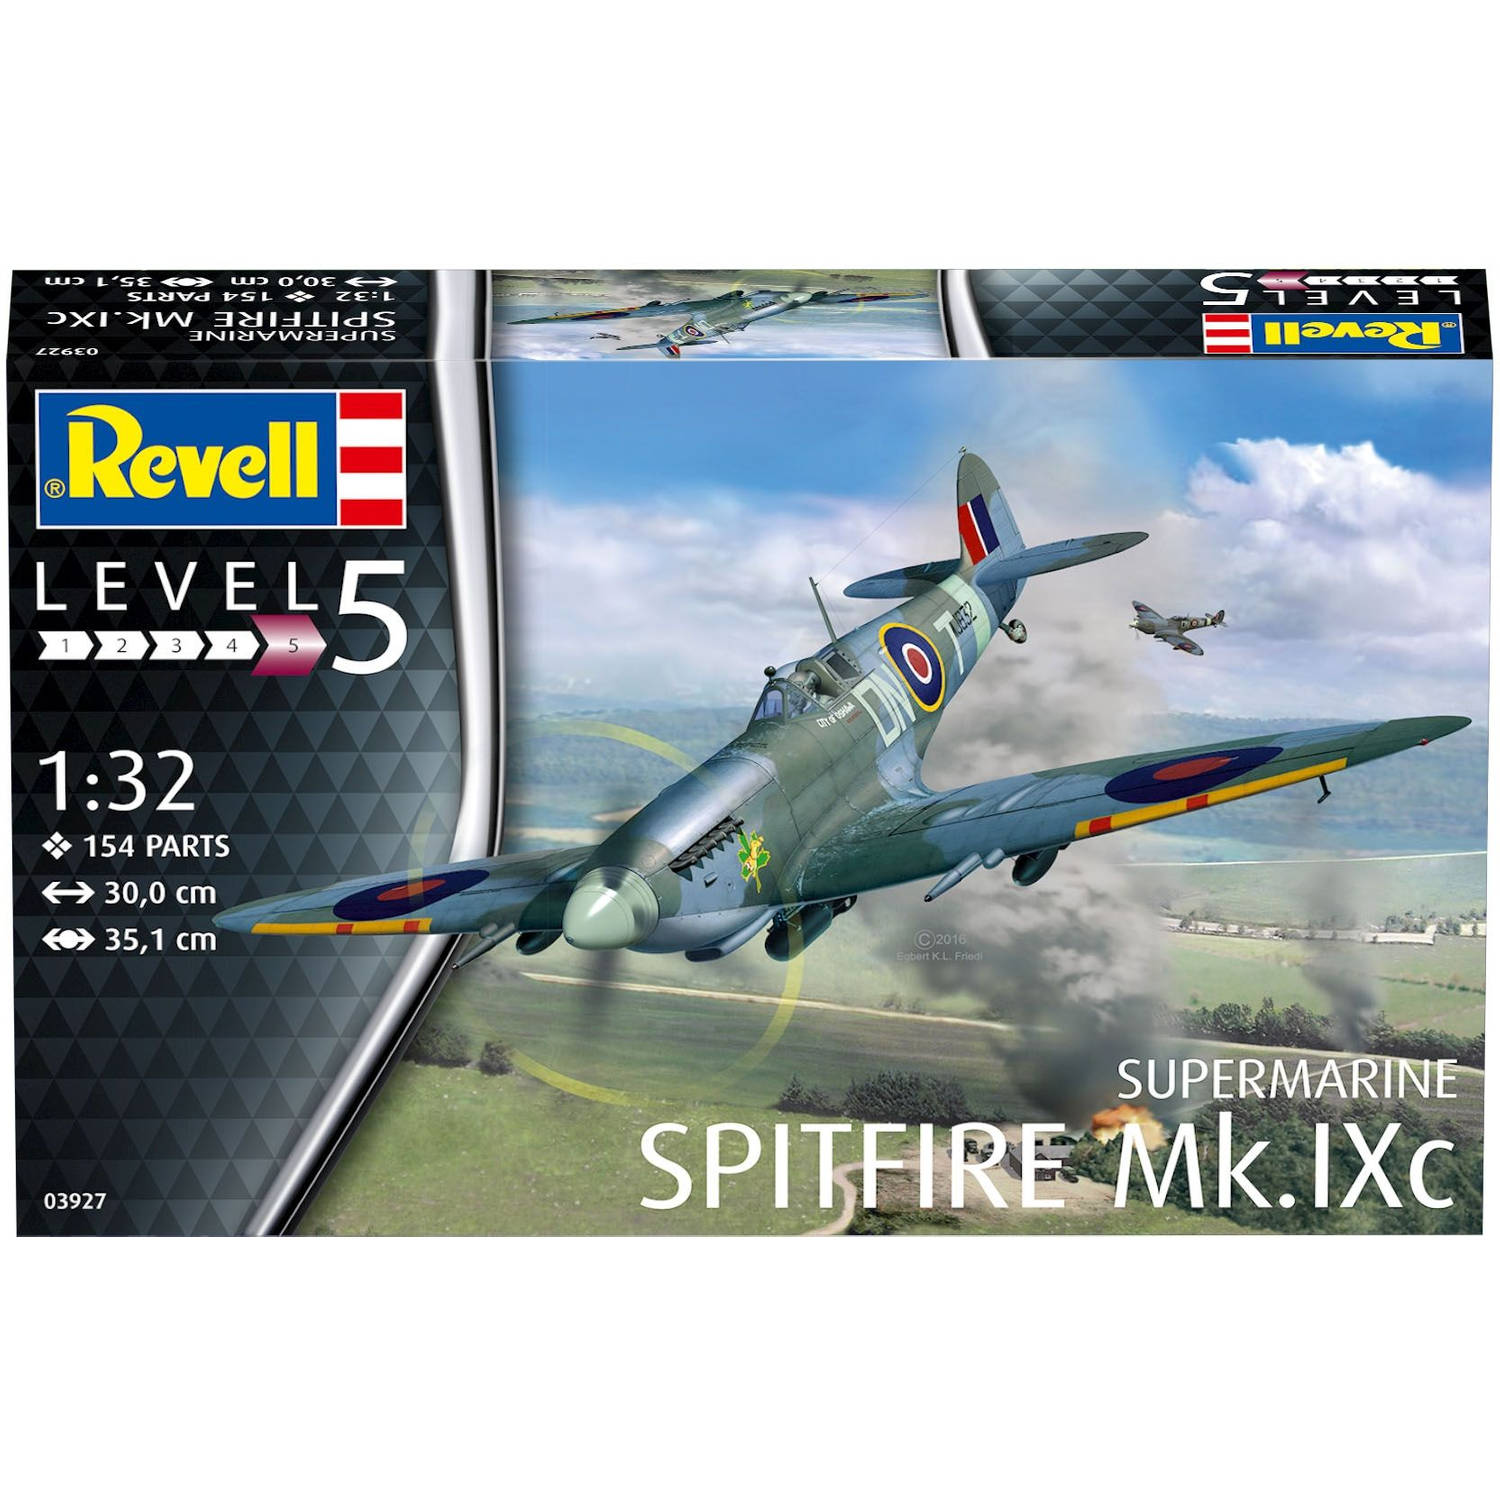 volume Romantiek Verbazing Supermarine Spitfire Mk.IXc Revell - schaal 1 -32 - Bouwpakket Revell  Luchtvaart | Blokker